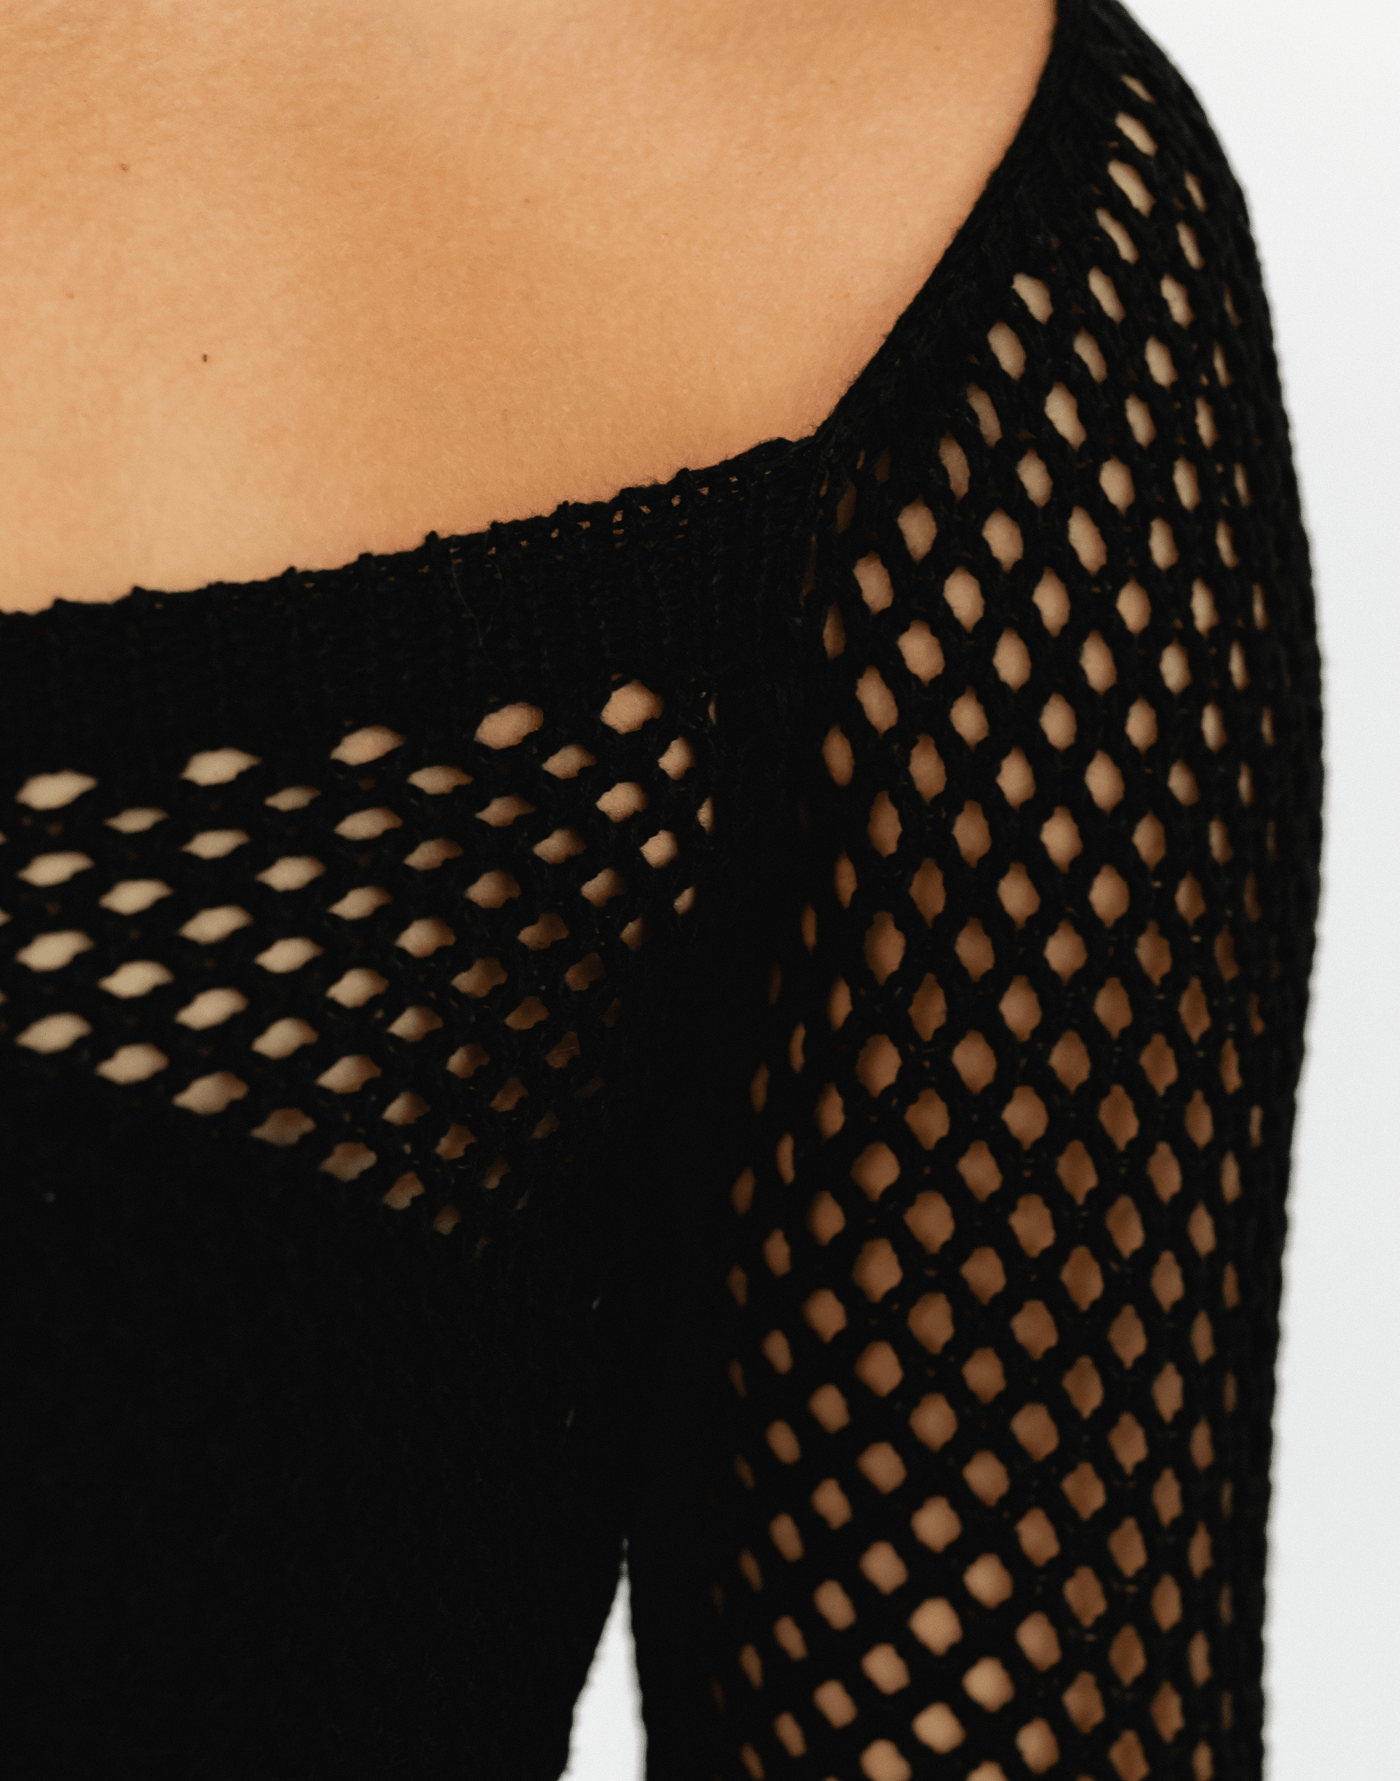 Cyprus Long Sleeve Top (Black) - Long Sleeved Crop Top - Women's Top - Charcoal Clothing